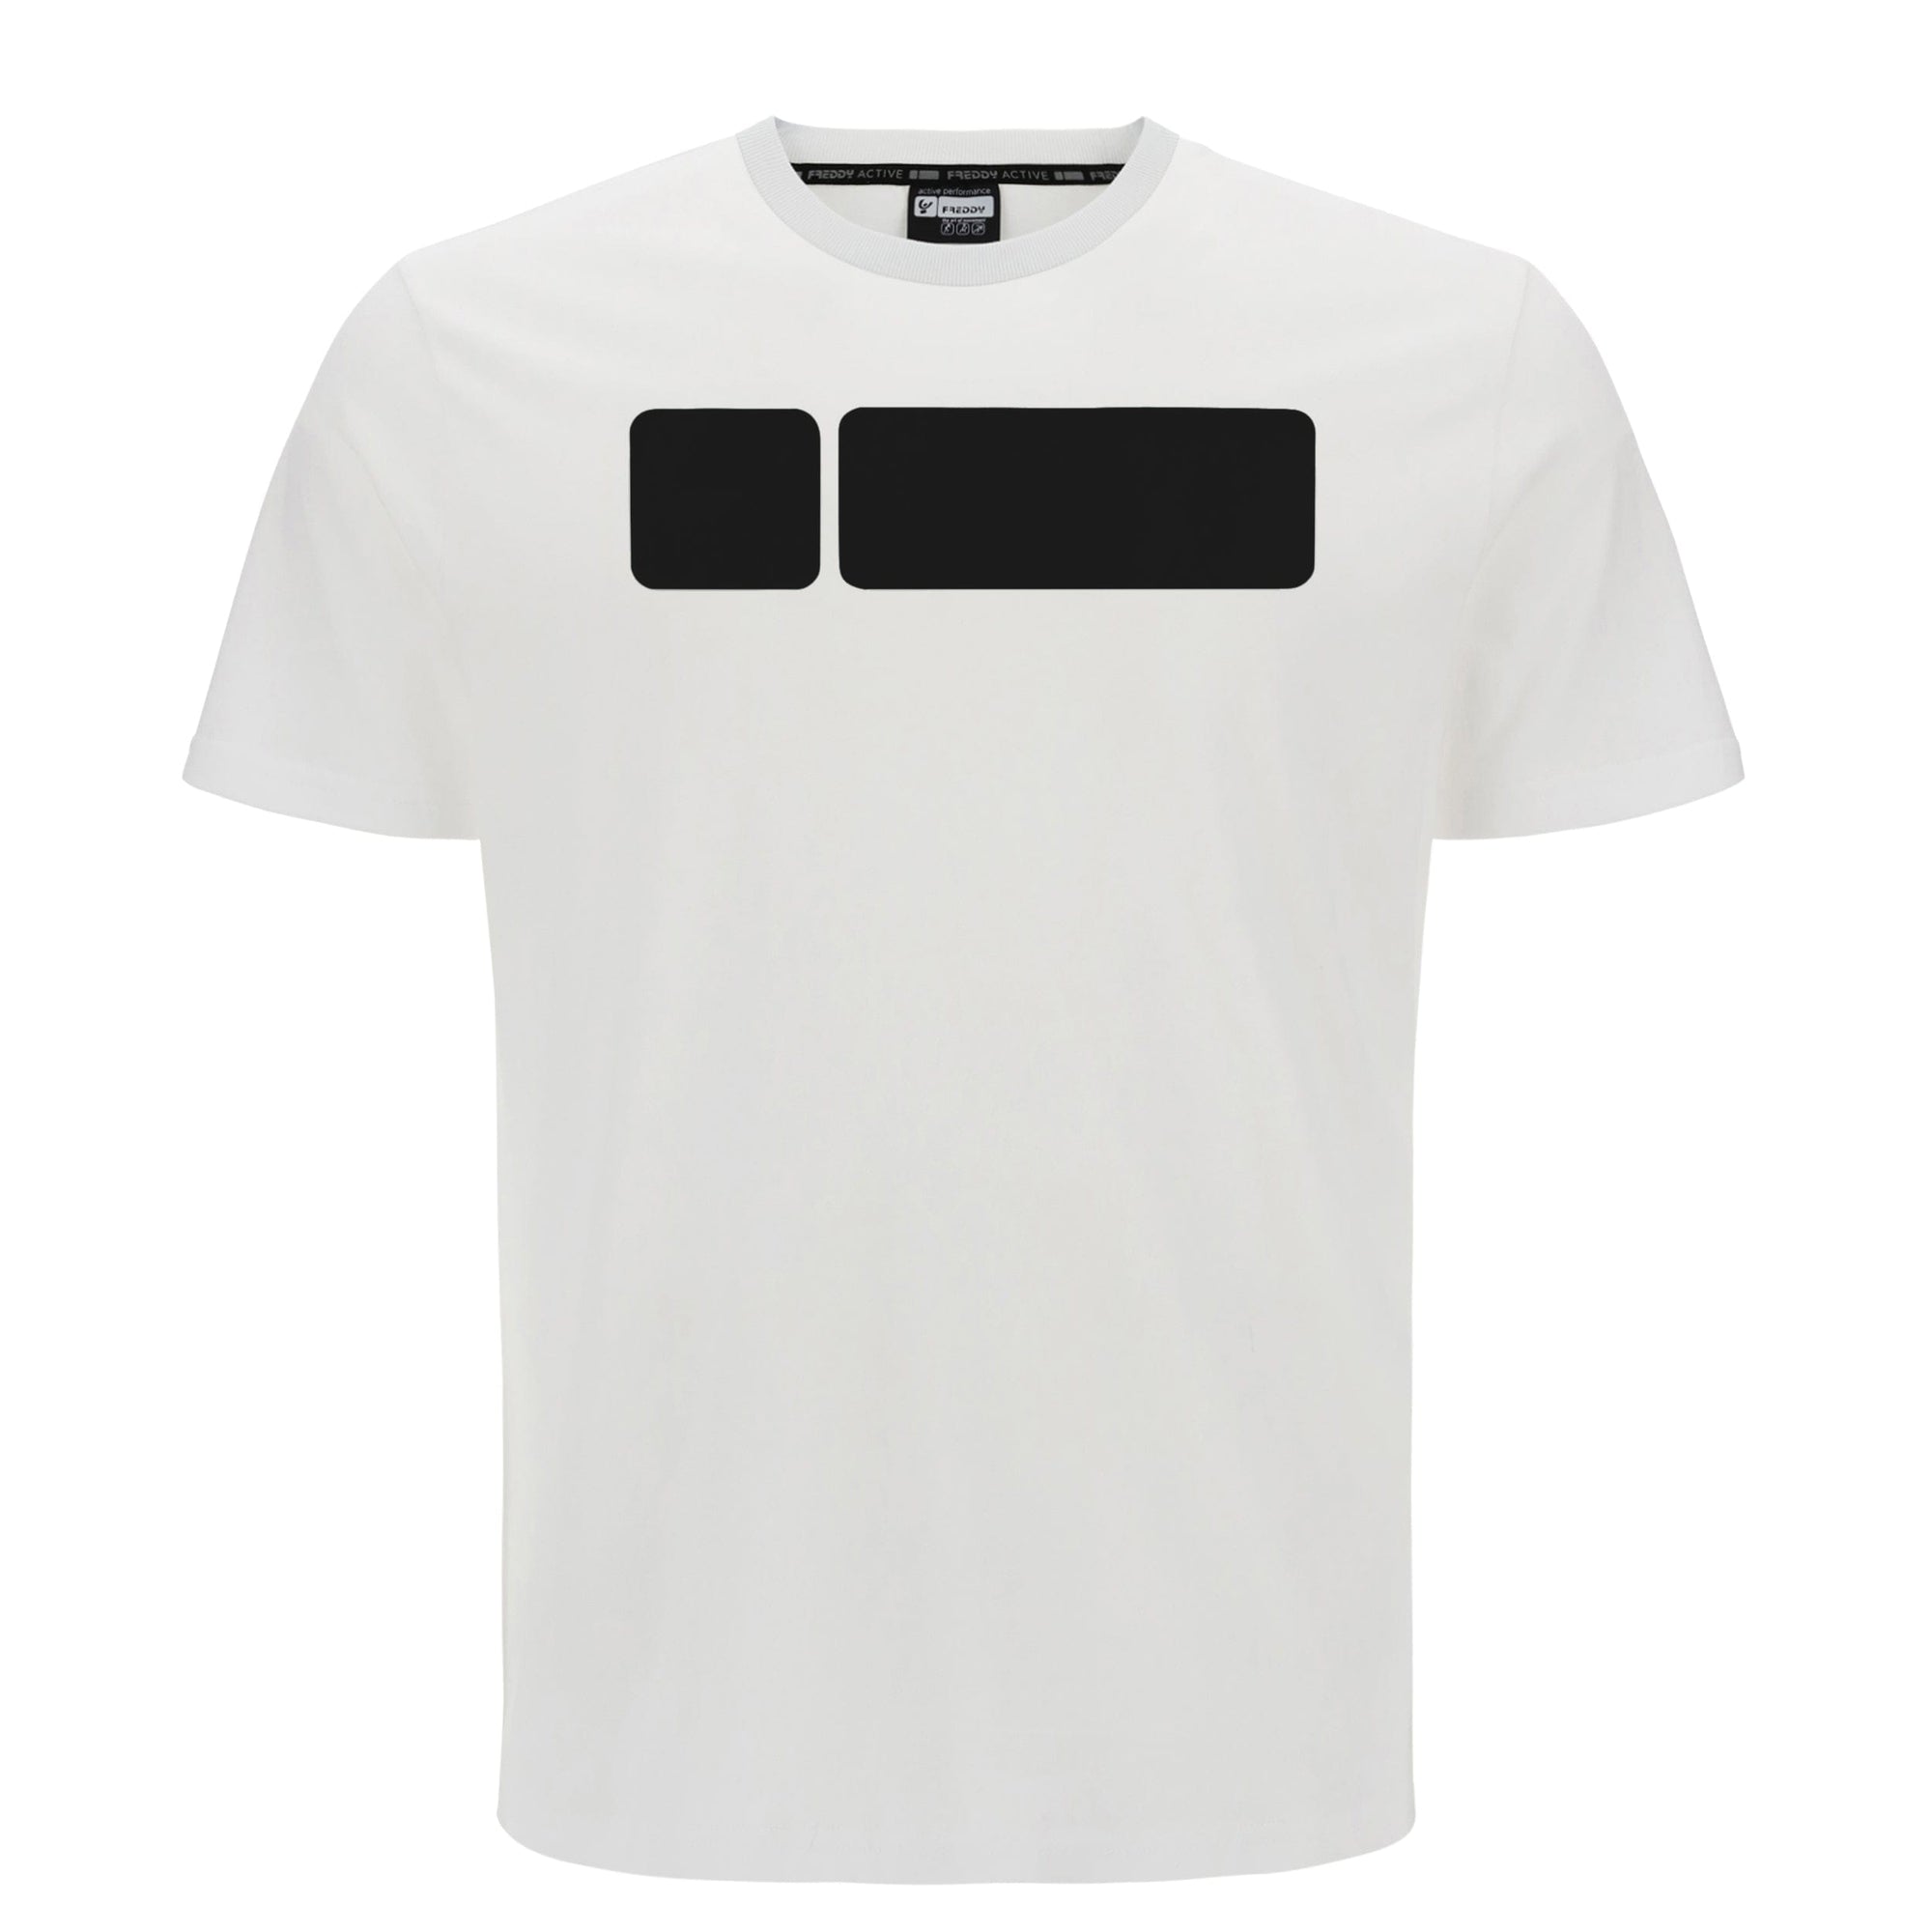 Men's T-shirt with Black Logo - White + Black 1